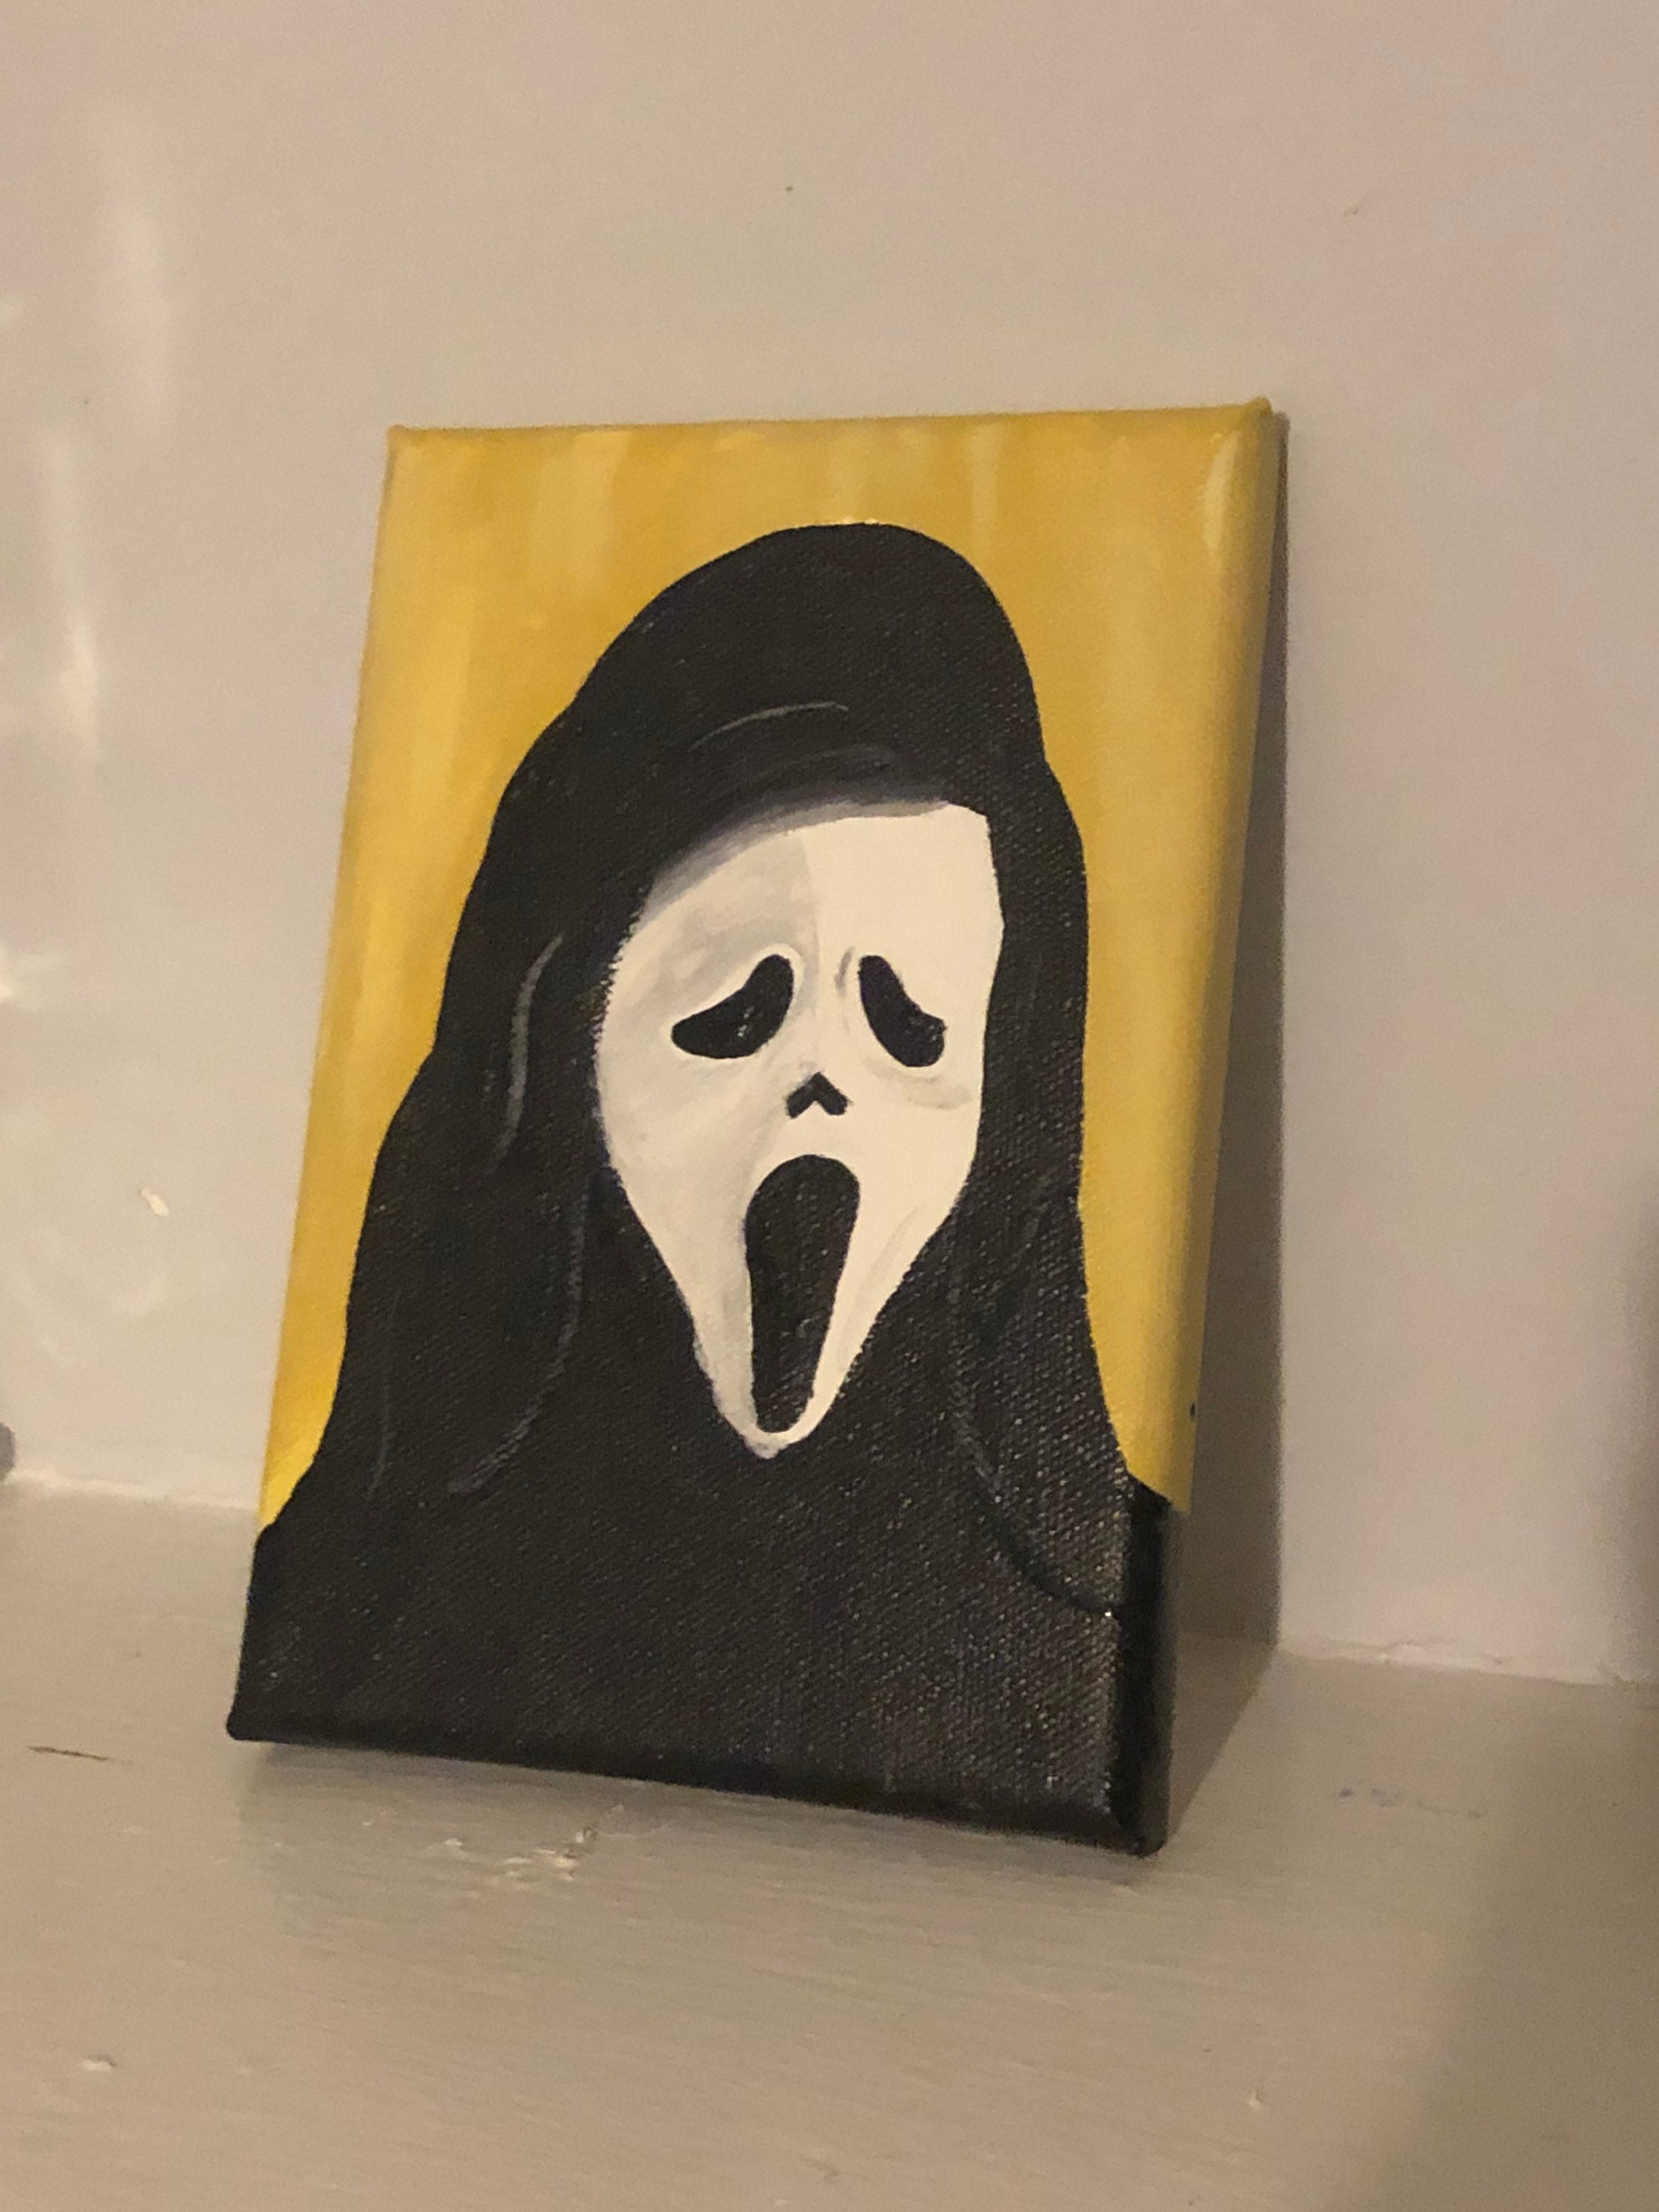 Cute Ghostface Scream Painting